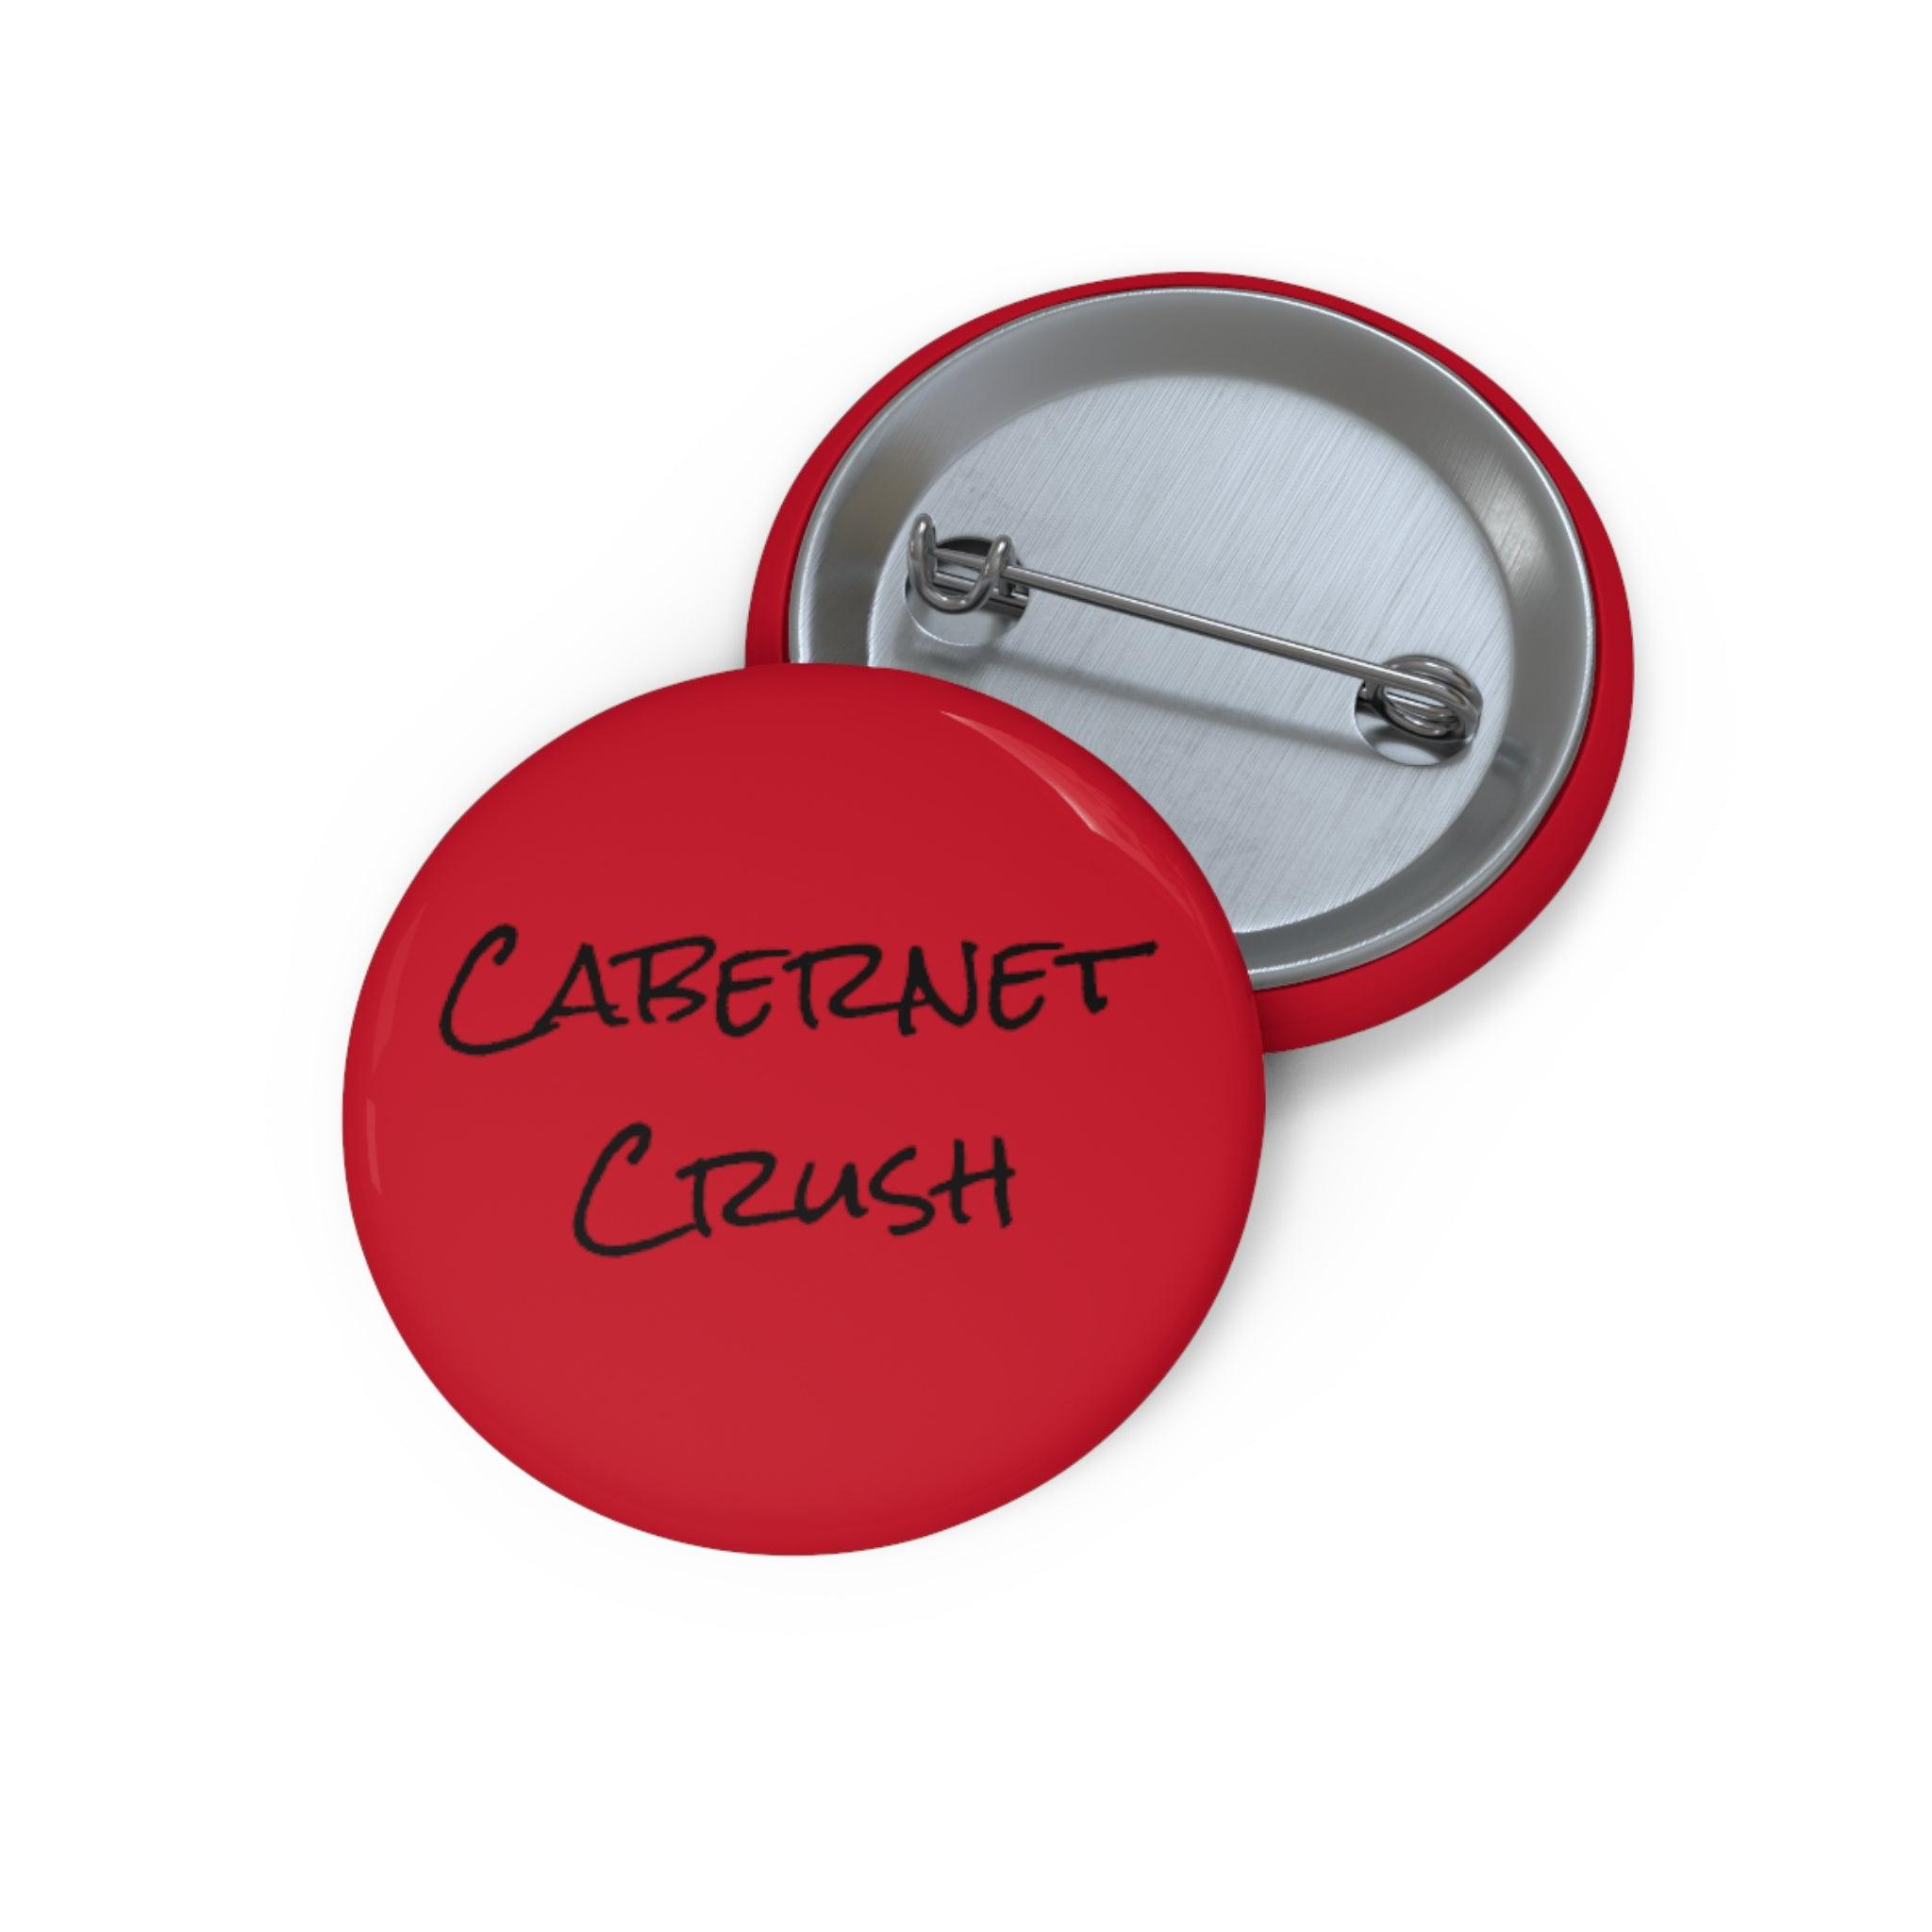 Cabernet Crush  Pin Buttons